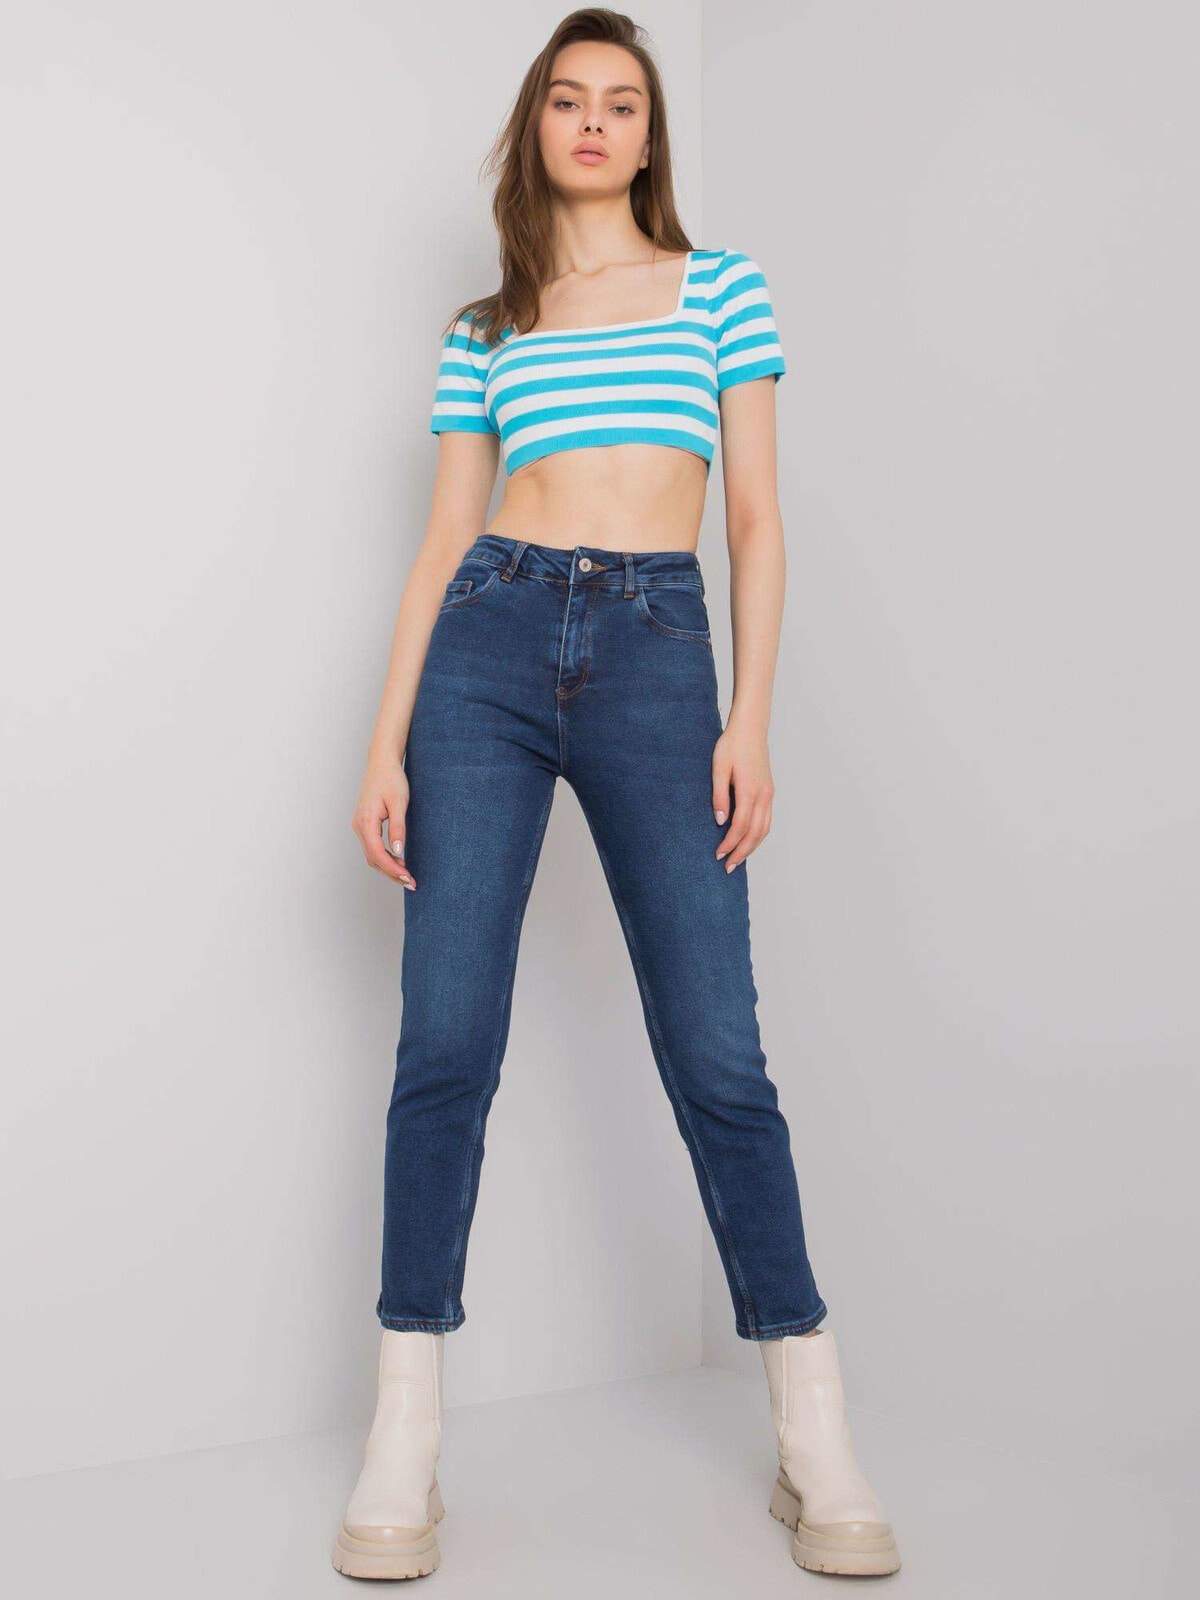 Женские синие джинсы Factory Price Spodnie jeans-MR-SP-5326.41-niebieski